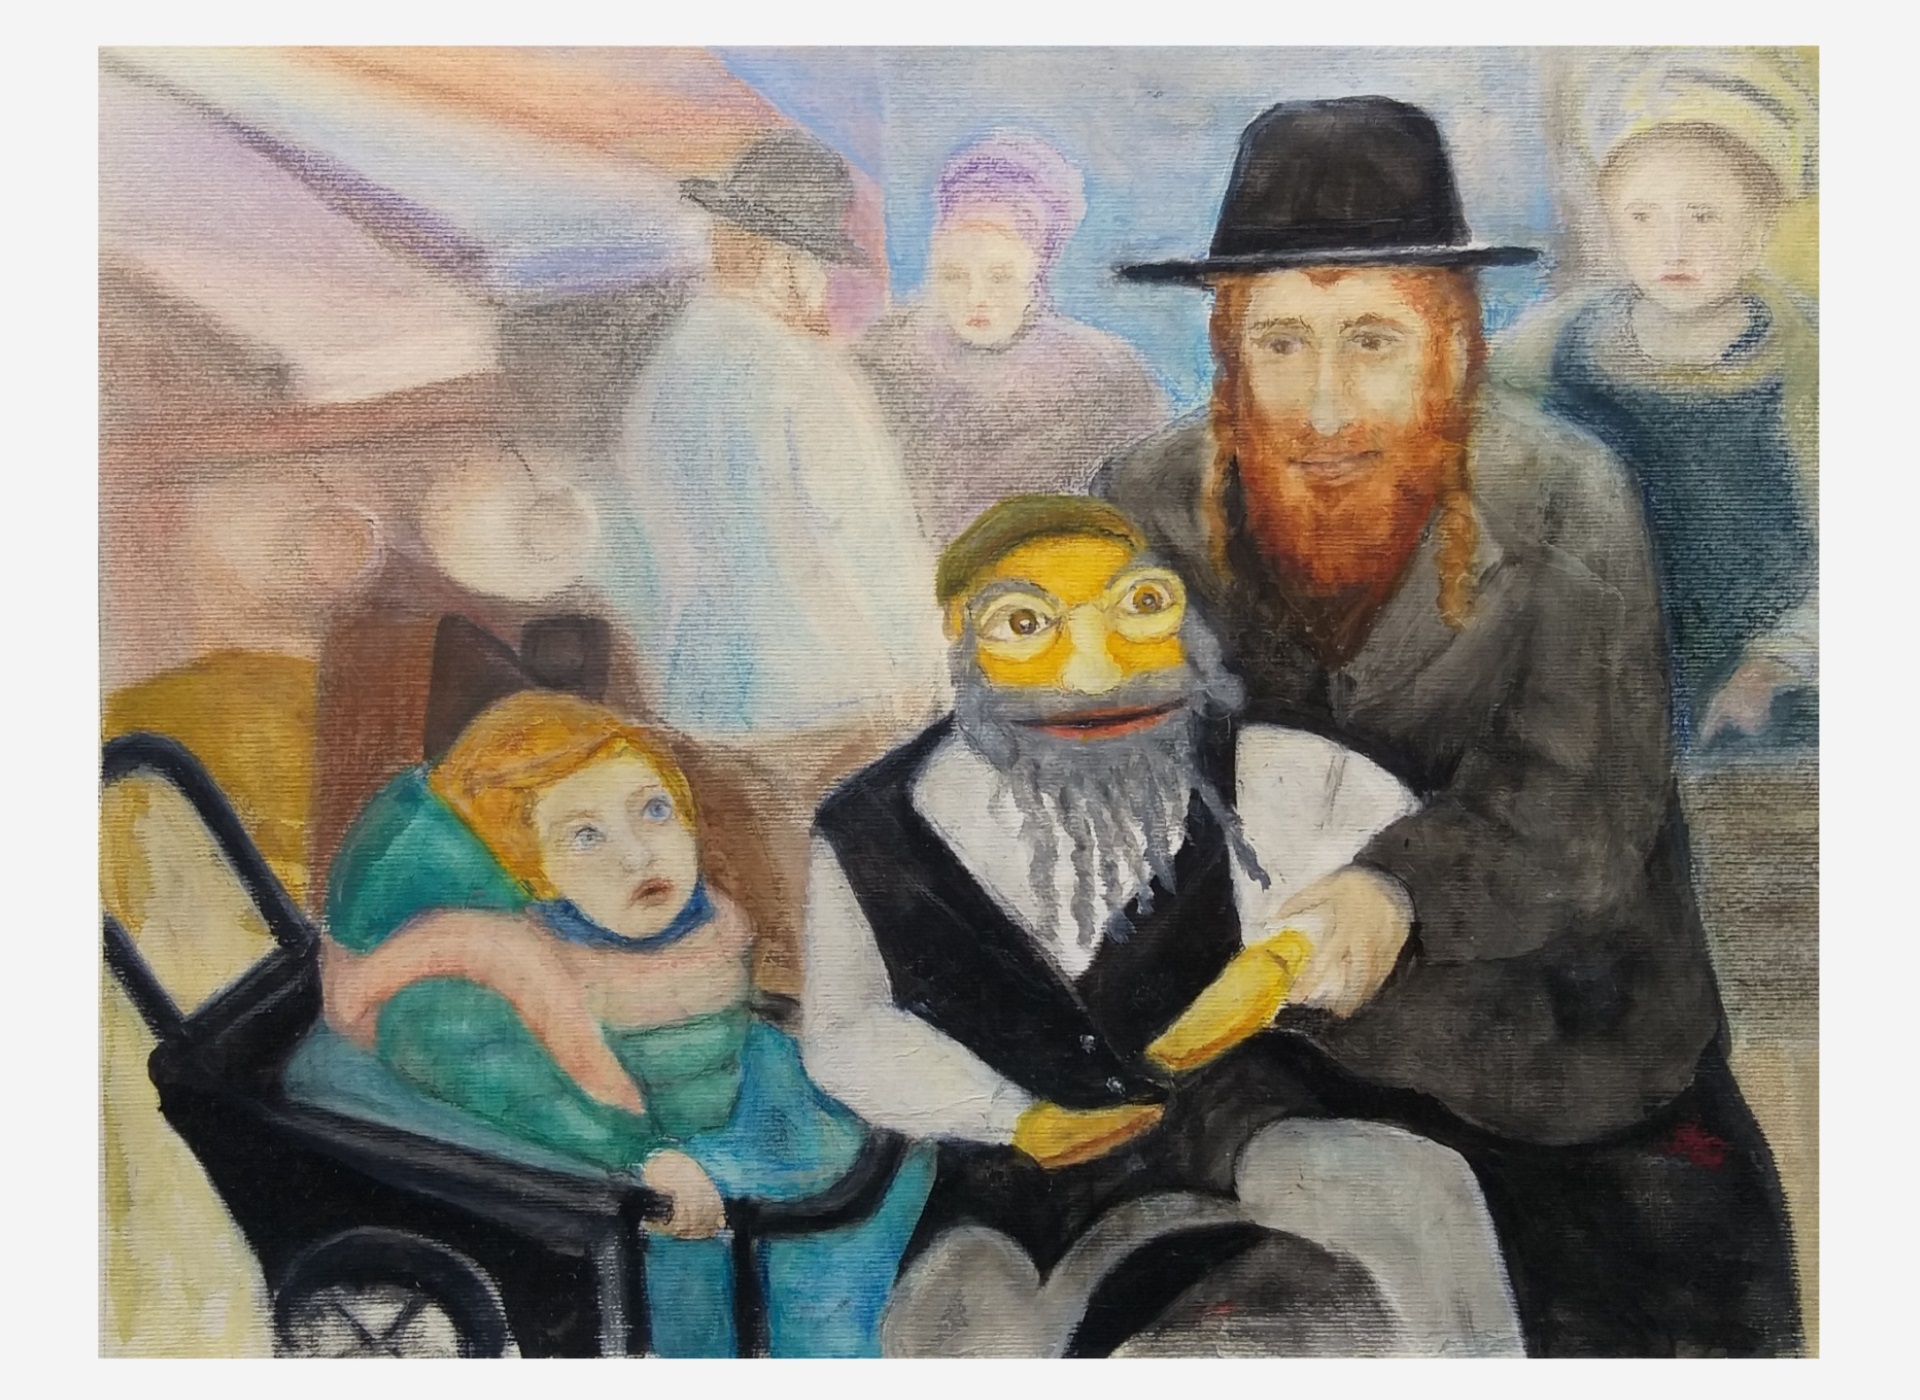 Puppeteer in Jerusalem Market - Oil Pastel and Pastel